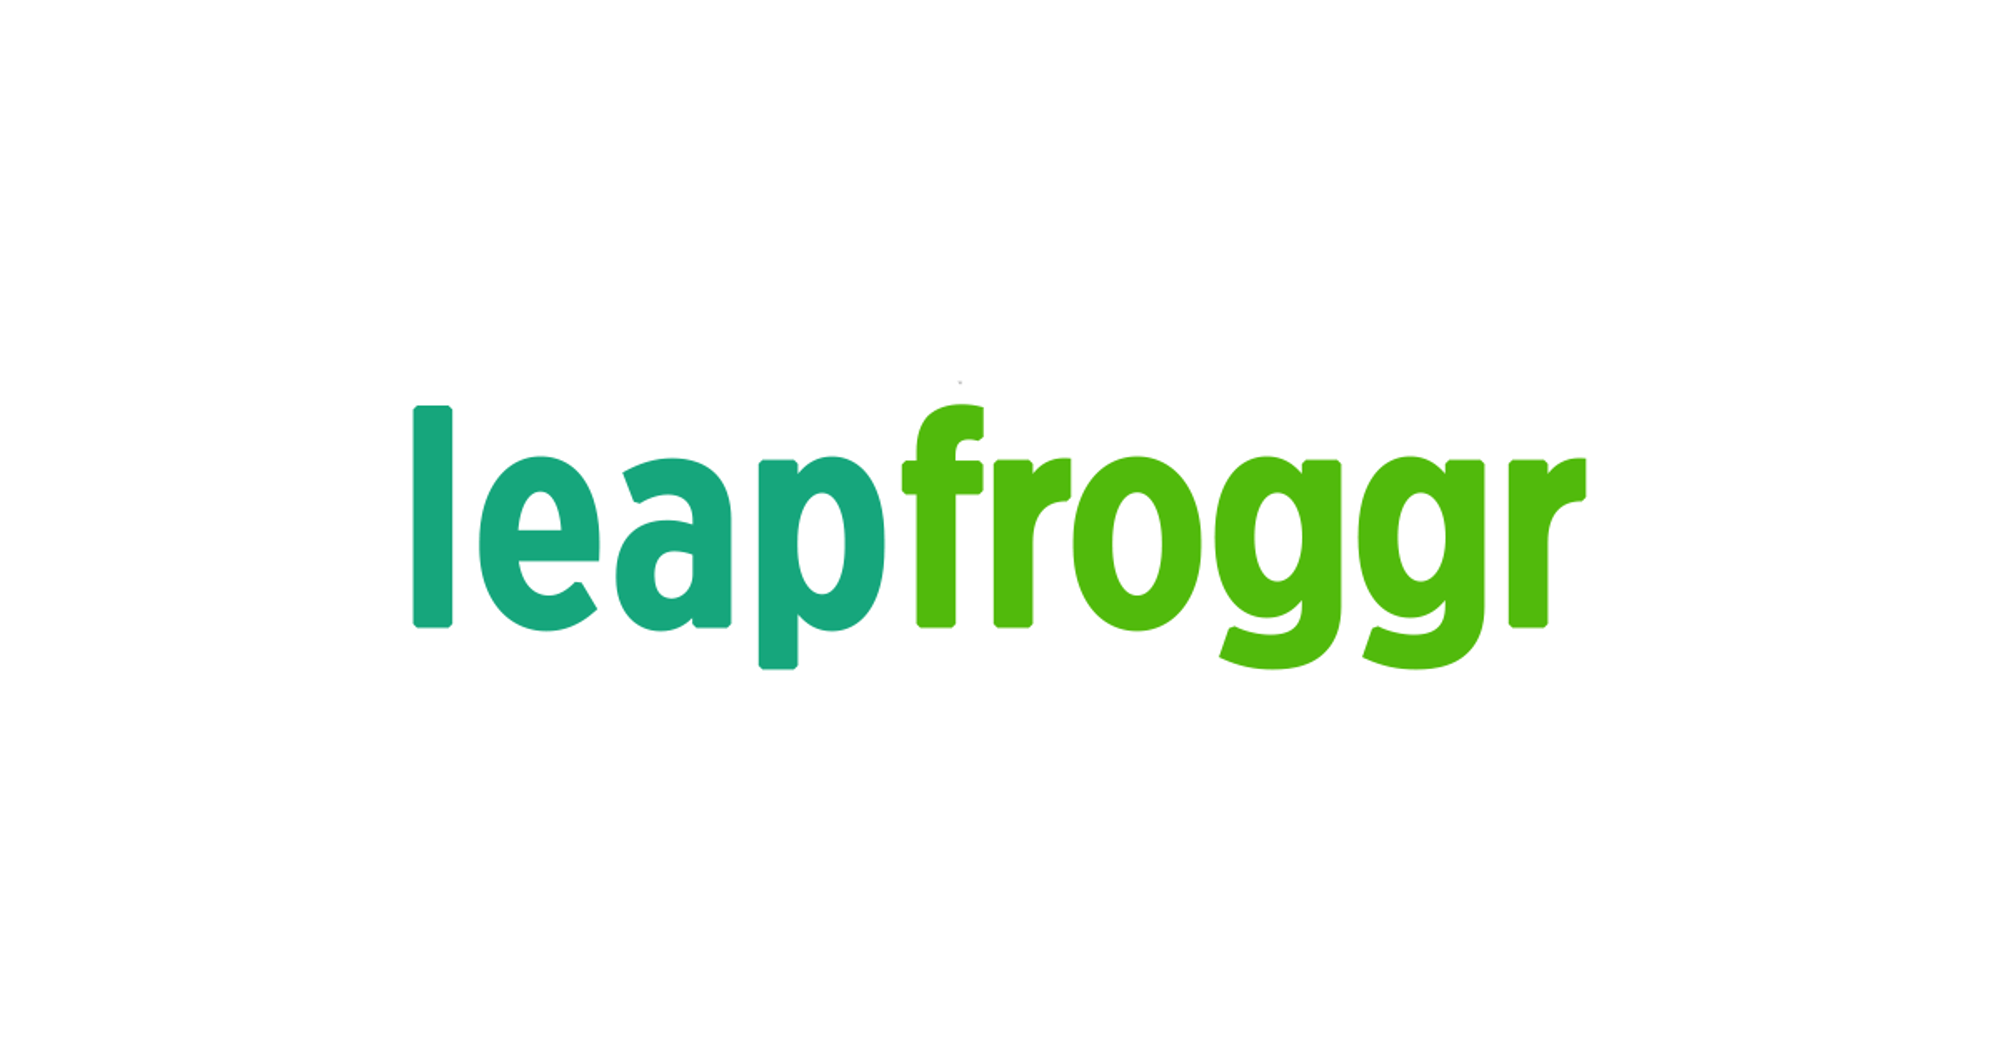 Pharmacy Assistant at LeapFroggr Inc.